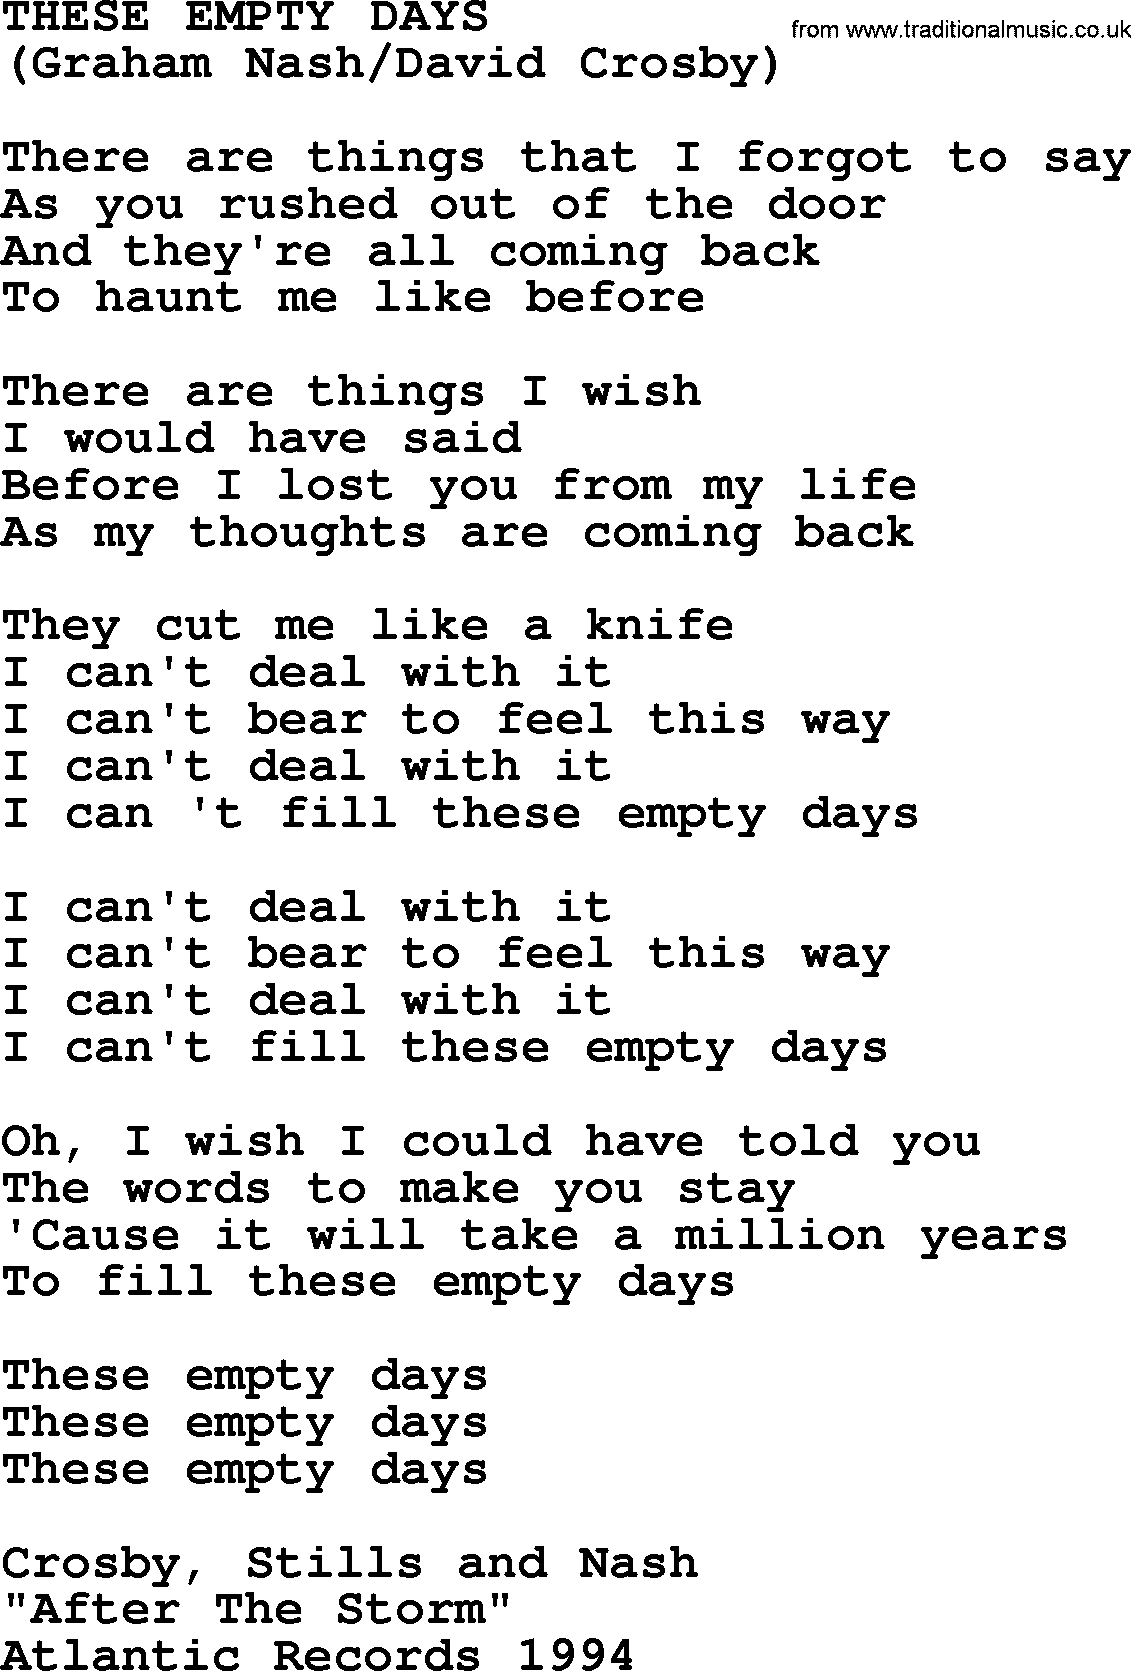 The Byrds song These Empty Days, lyrics